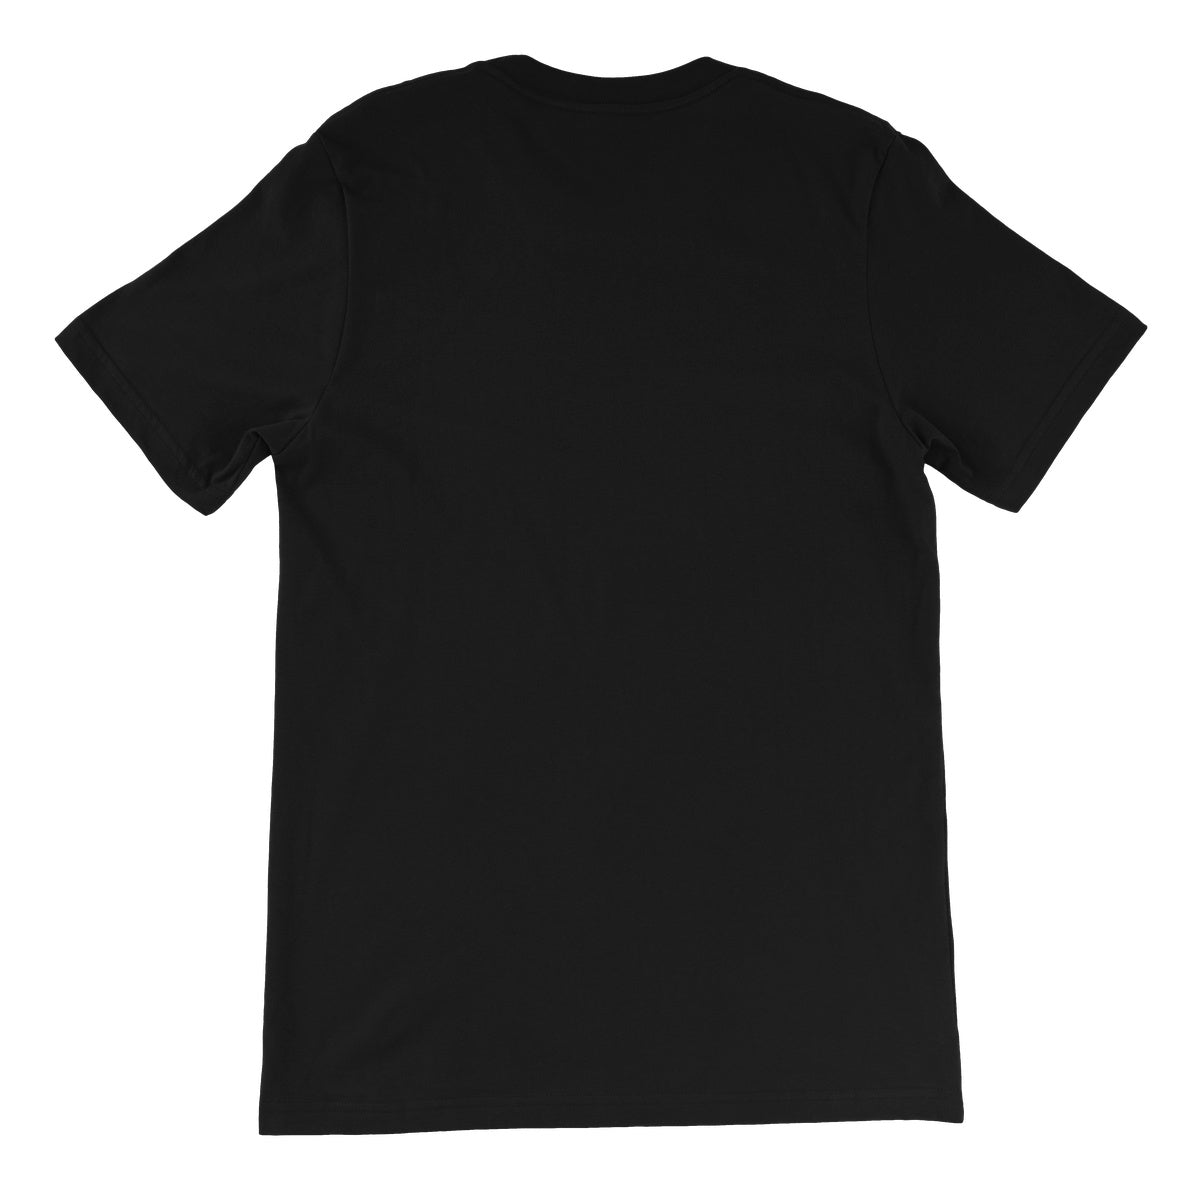 1984 Unisex Short Sleeve T-Shirt